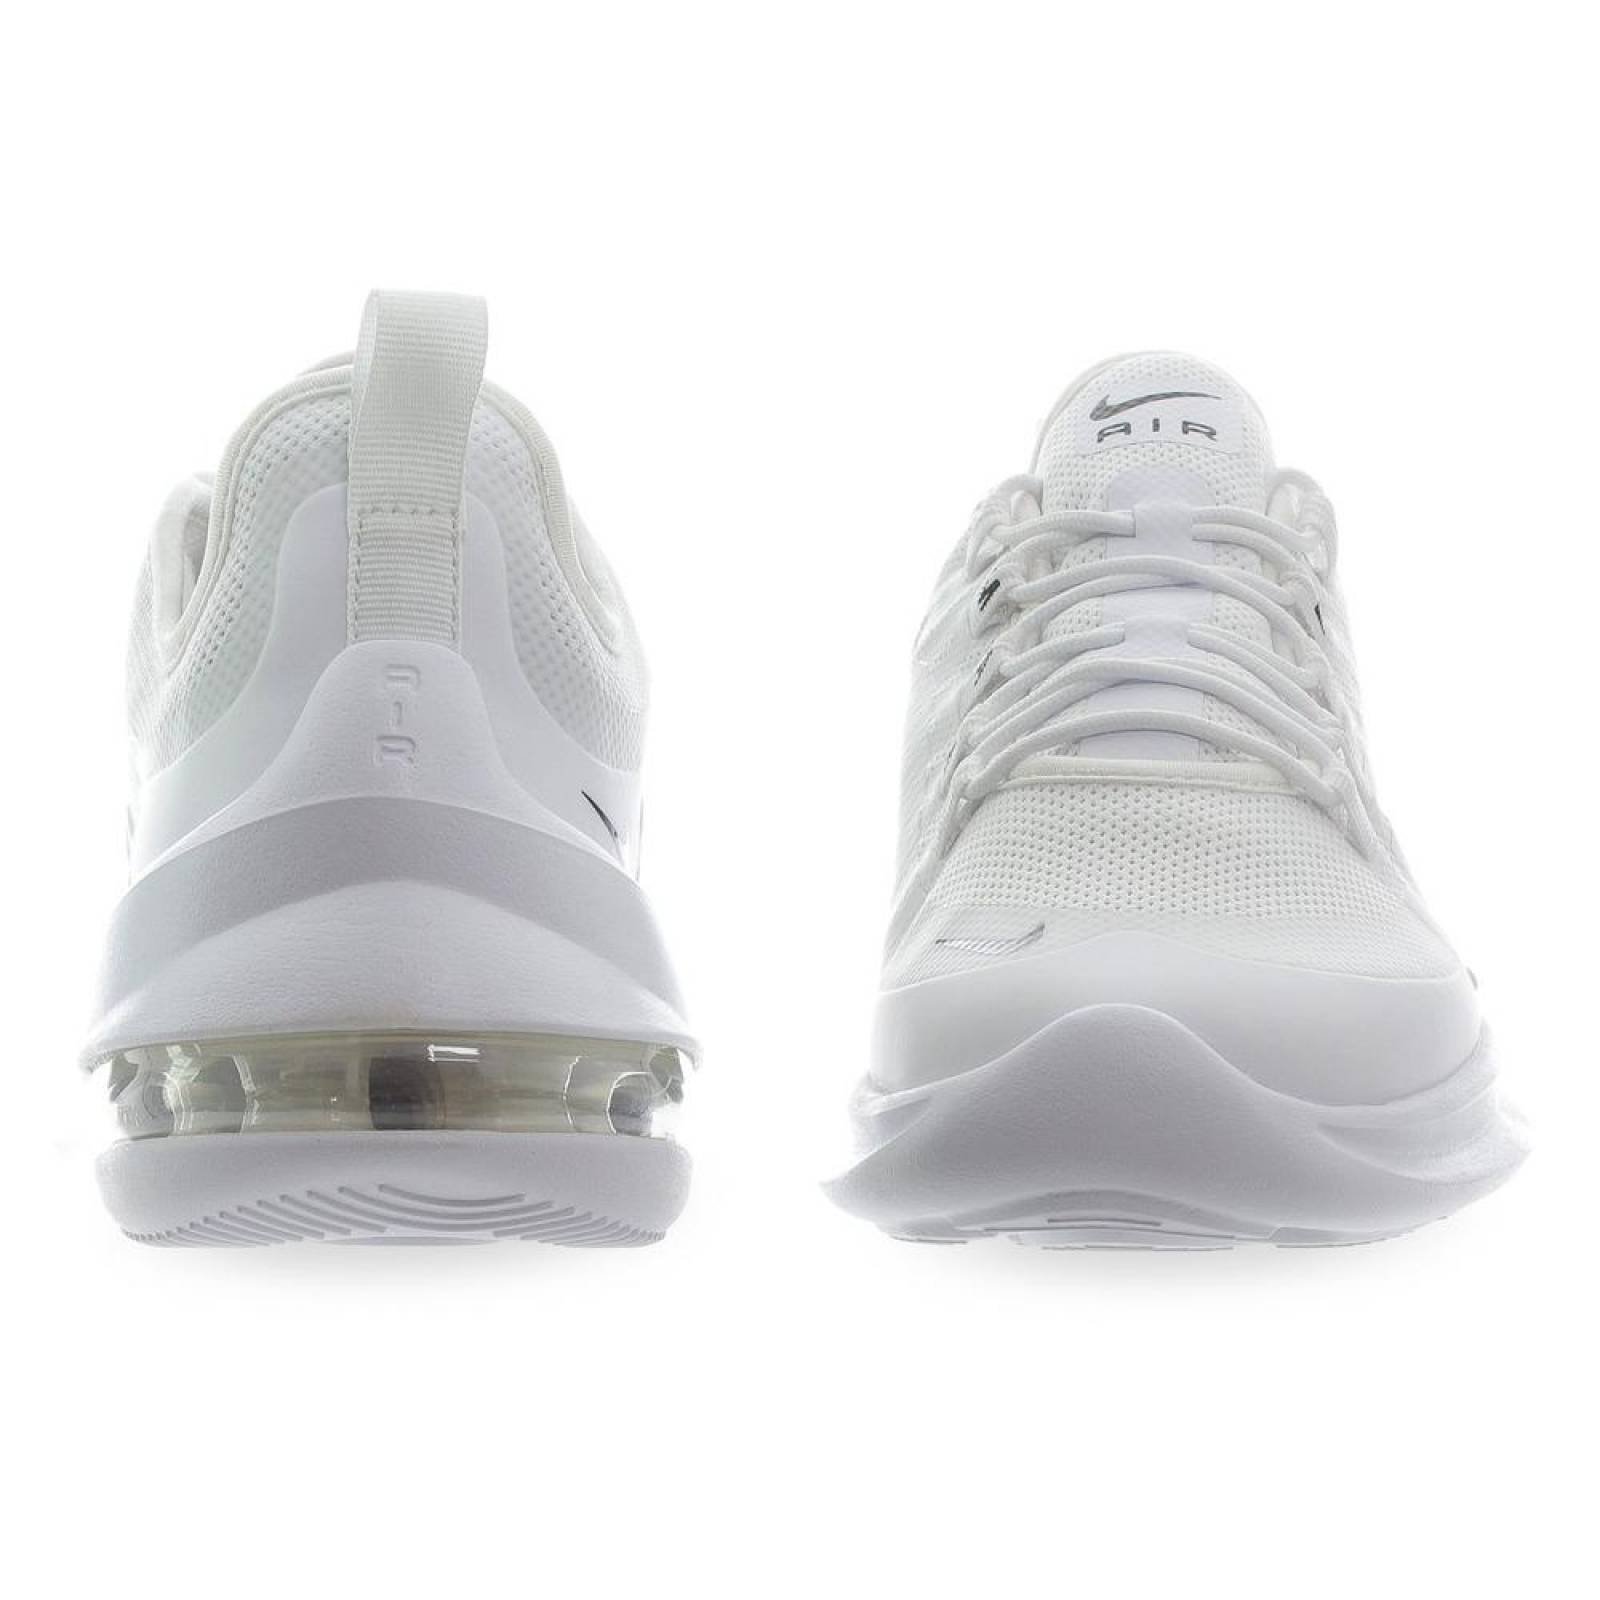 Tenis Nike Air Max Axis - AA2146100 - Blanco - Hombre 